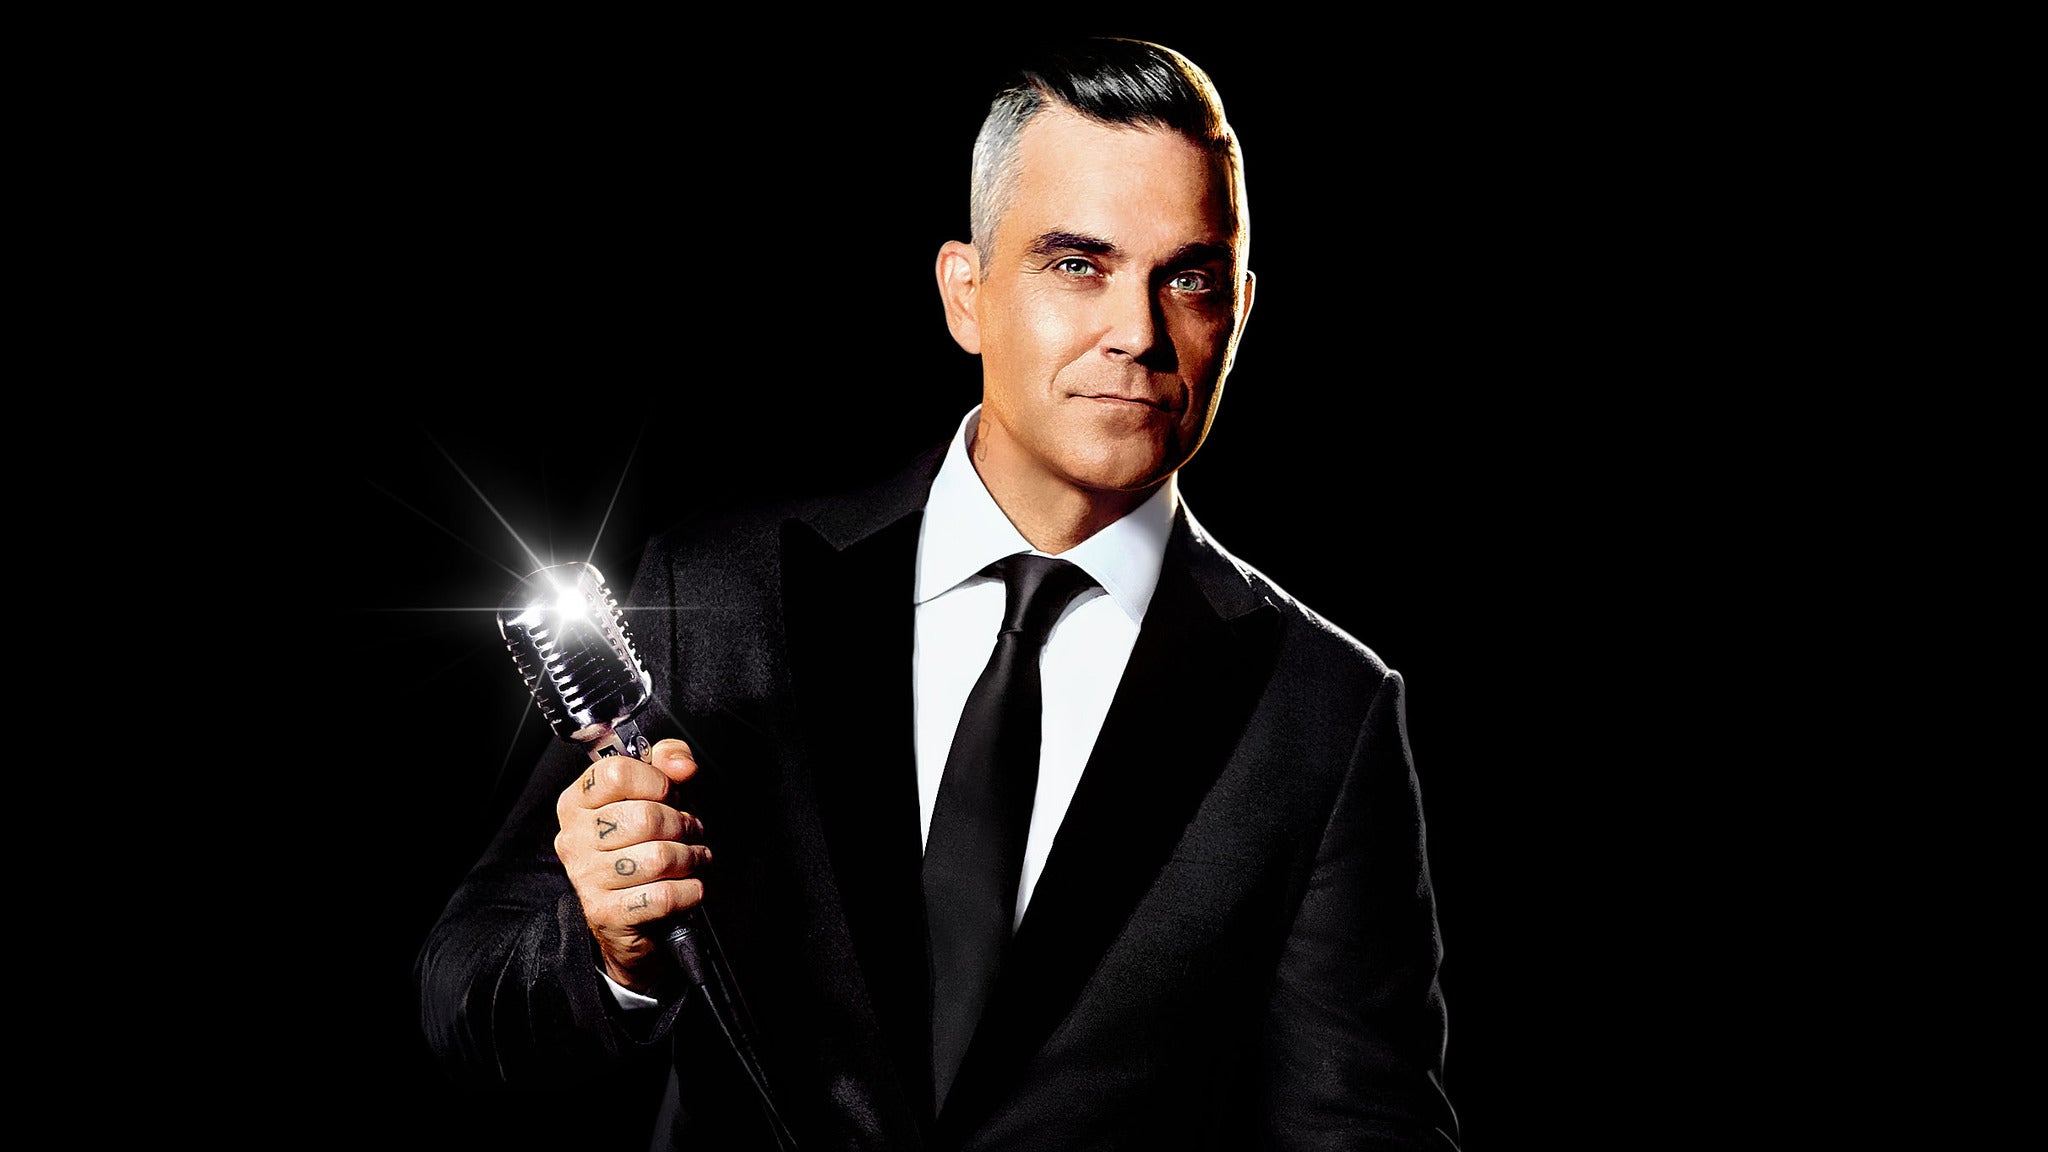 Robbie Williams in Las Vegas promo photo for American Express® Card Member presale offer code